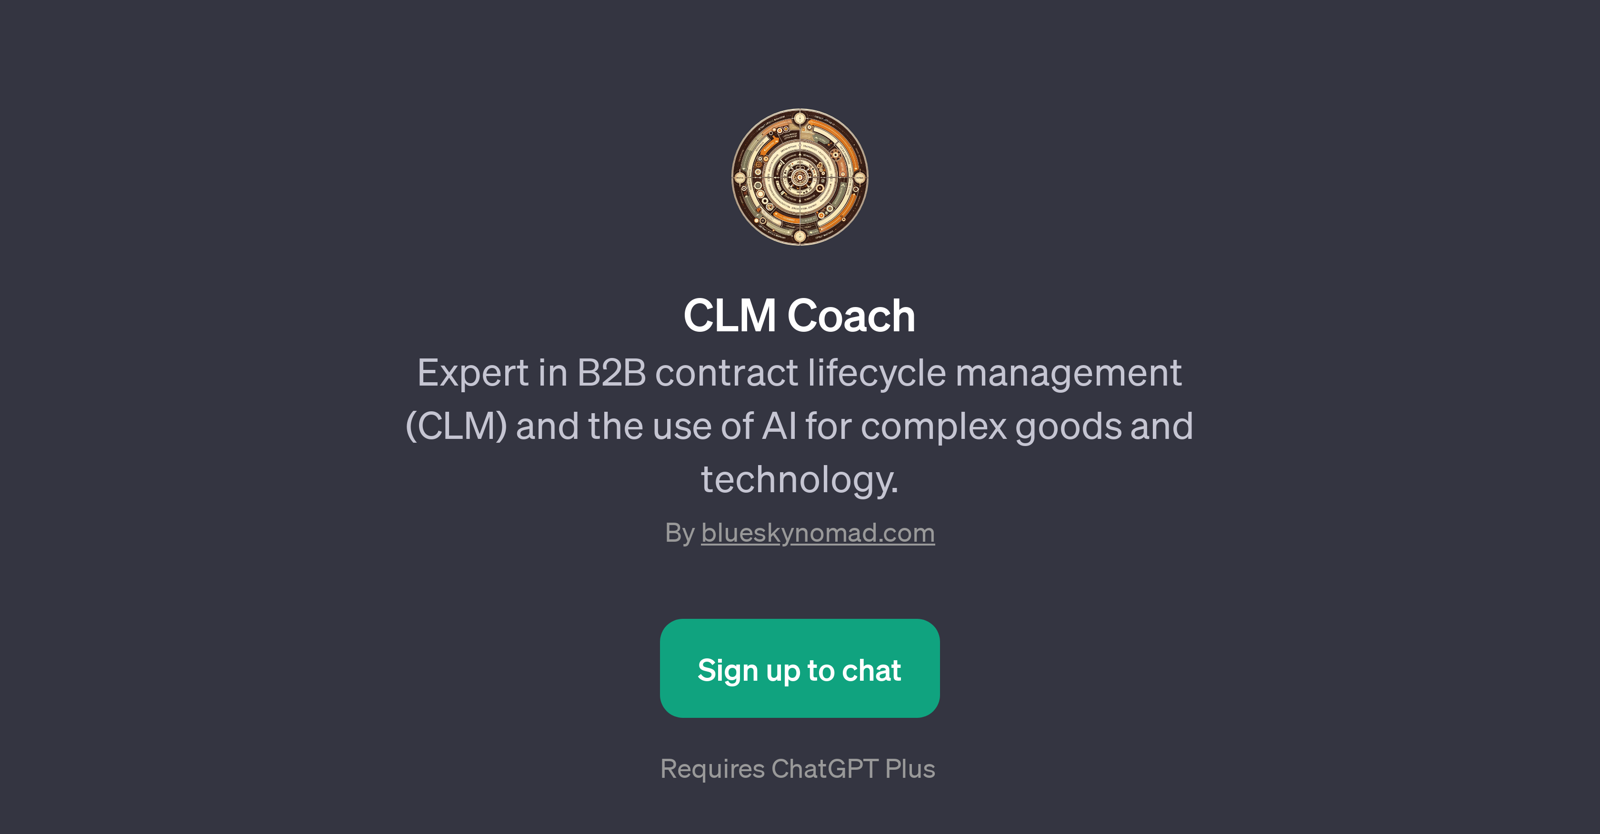 CLM Coach website